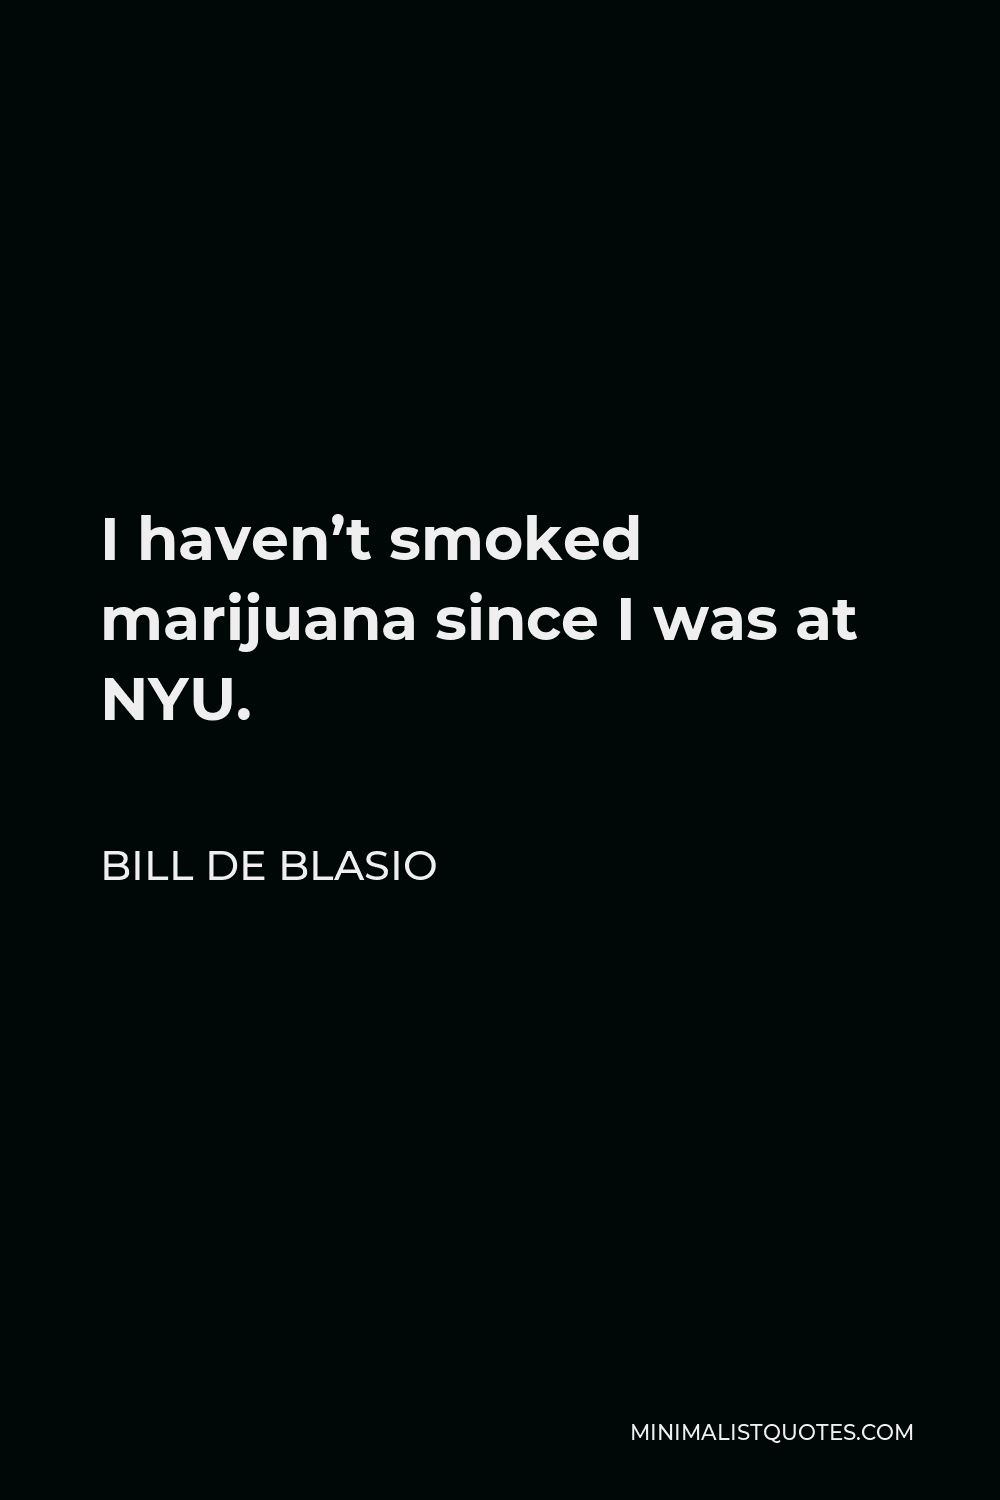 Bill de Blasio Quote - I haven’t smoked marijuana since I was at NYU.